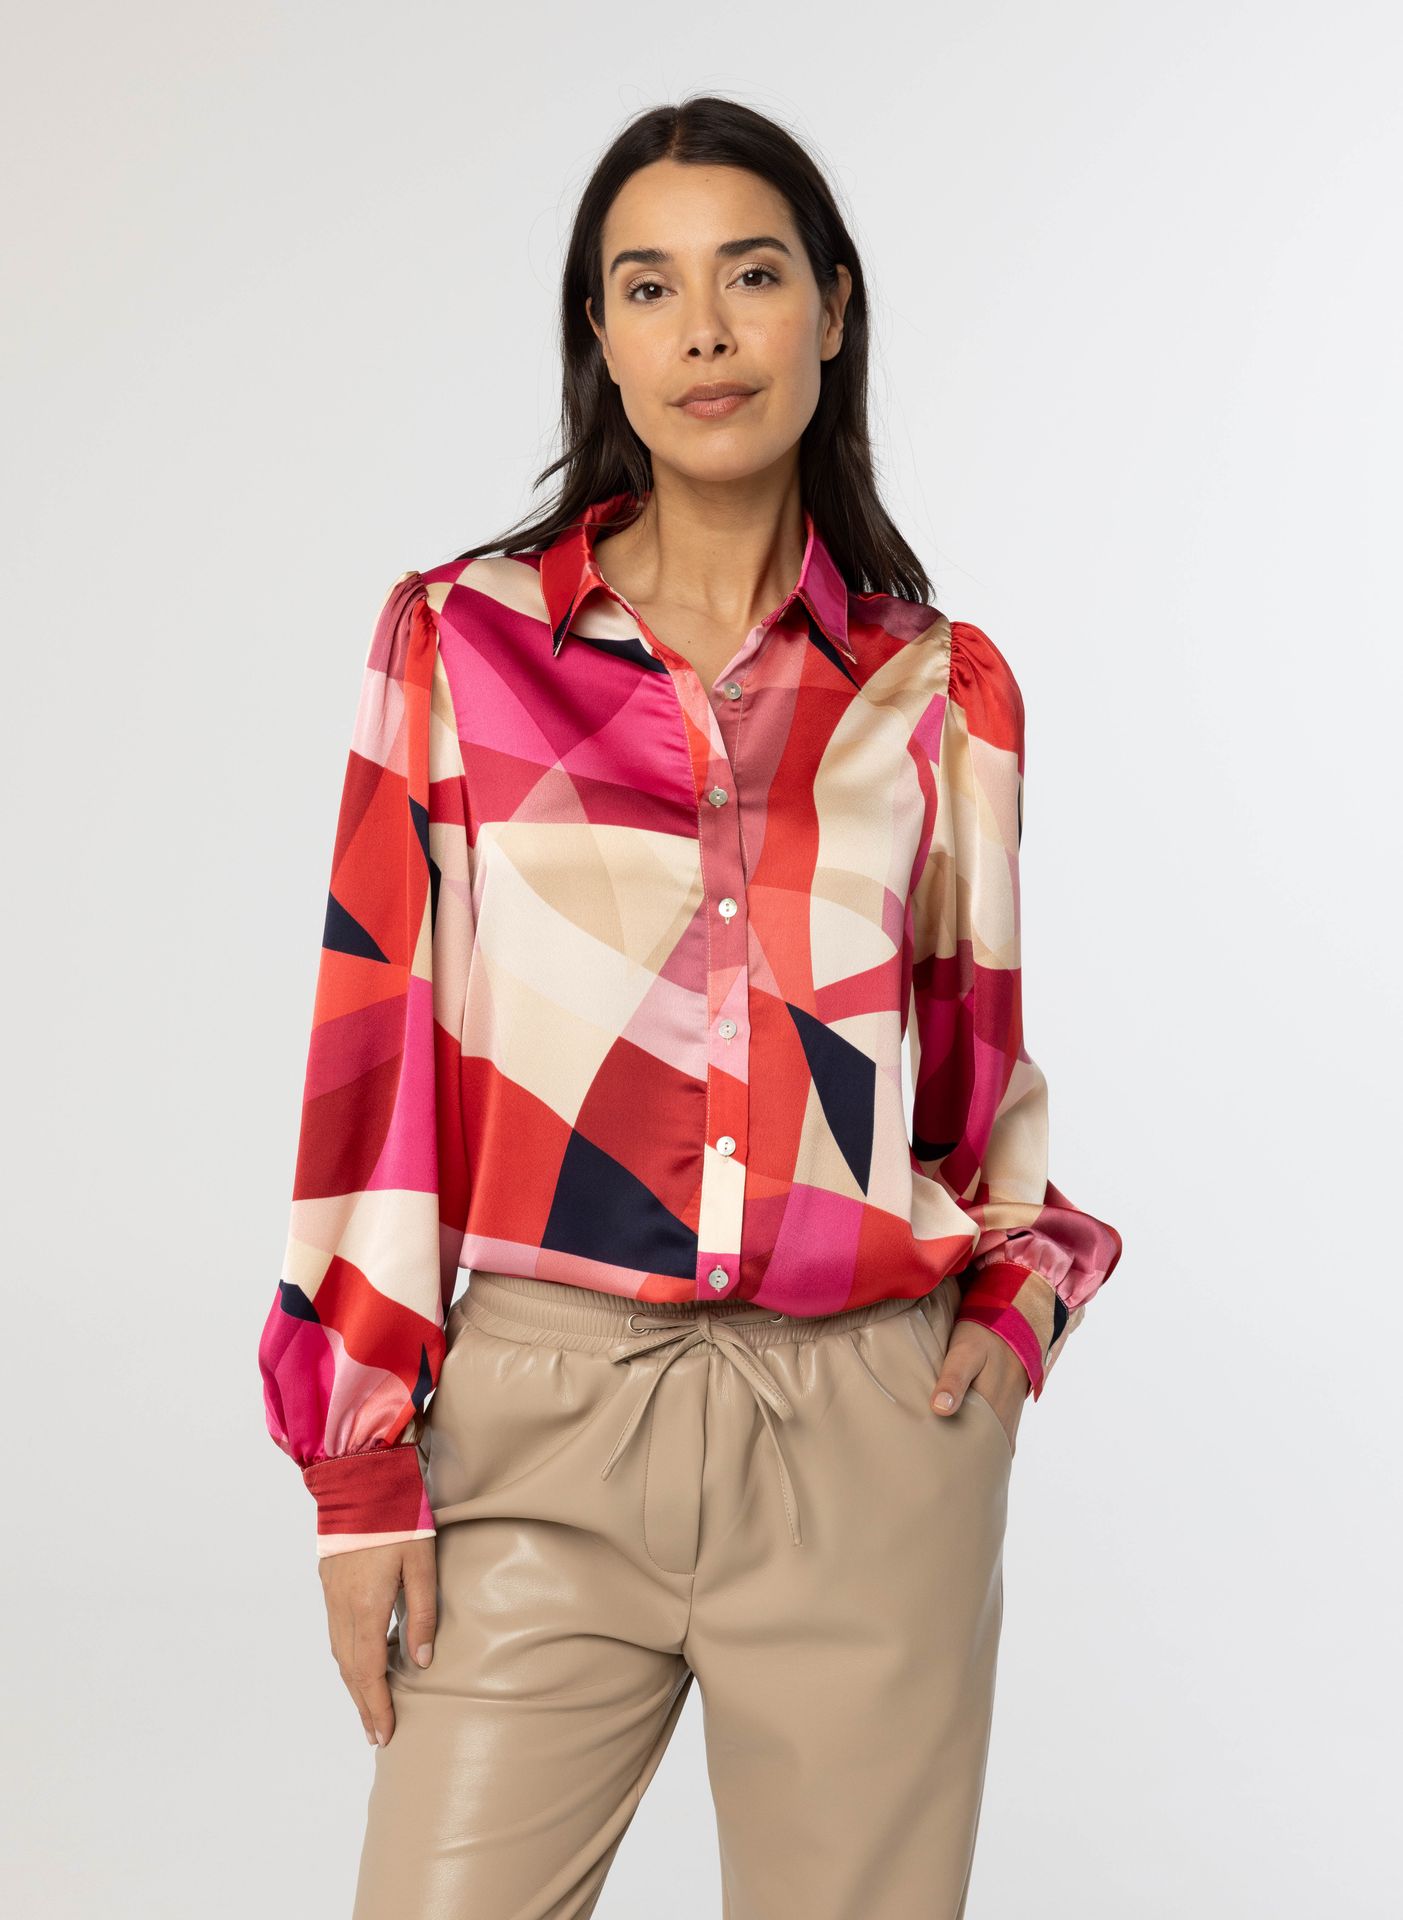 Norah Meerkleurige blouse roze multicolor 214291-002